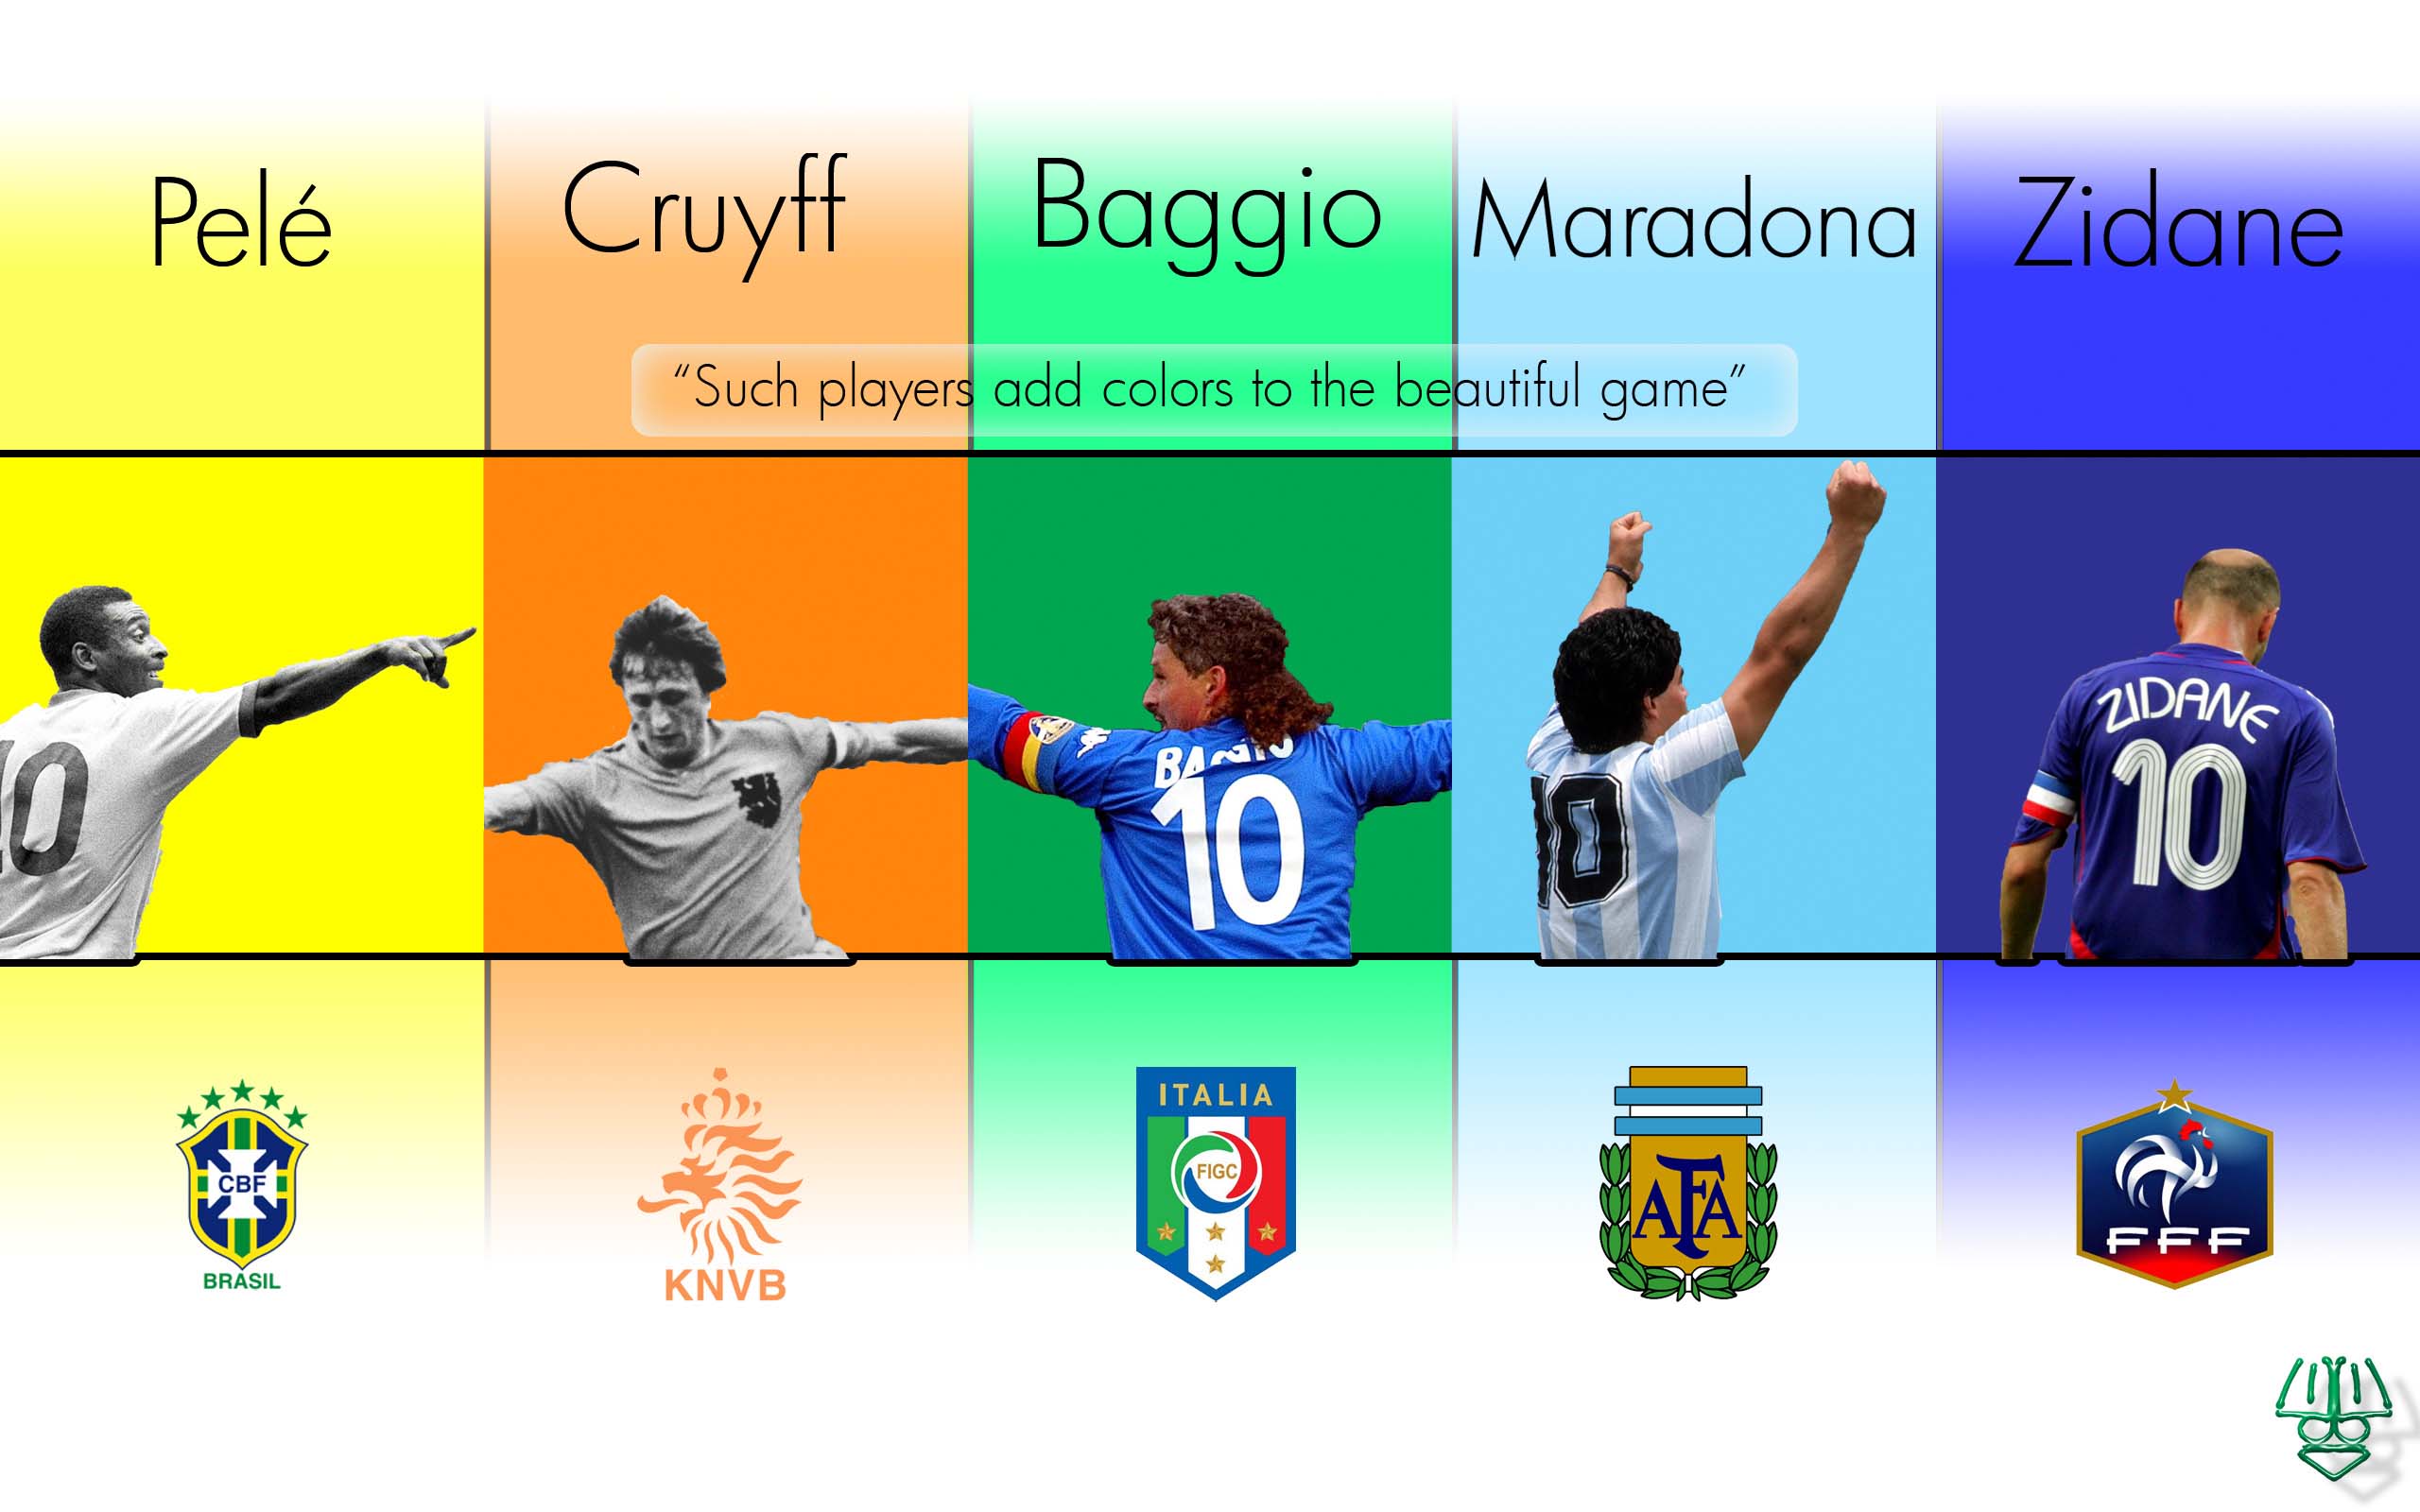 Pele, Cruytt, Baggio, Maradona and Zidane Wallpaper